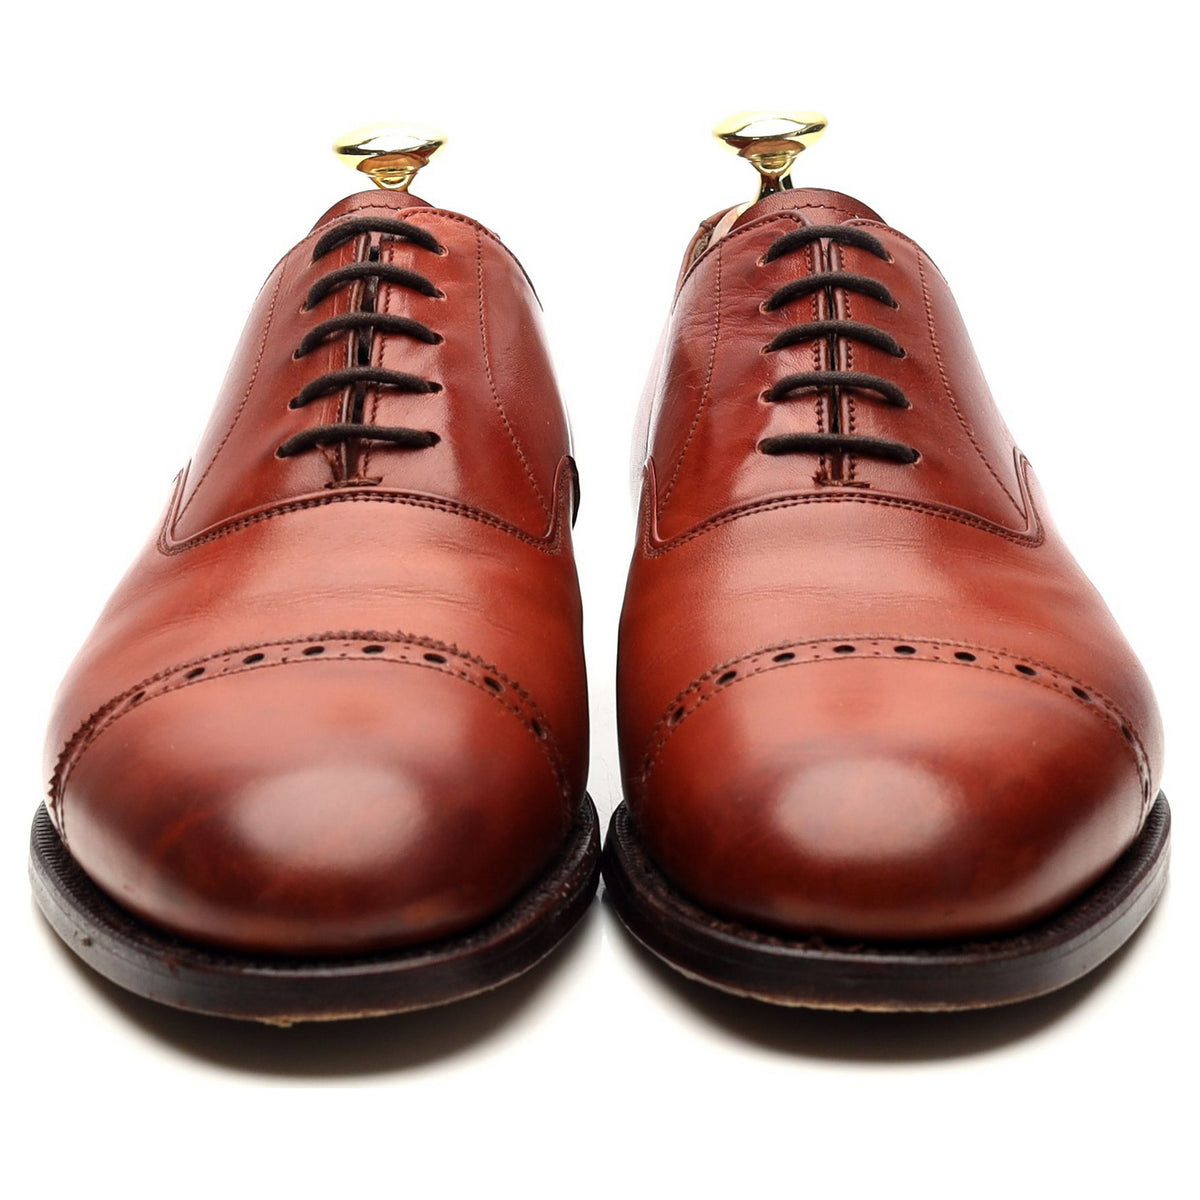 Vintage Tan Brown Leather Oxford UK 7.5 D